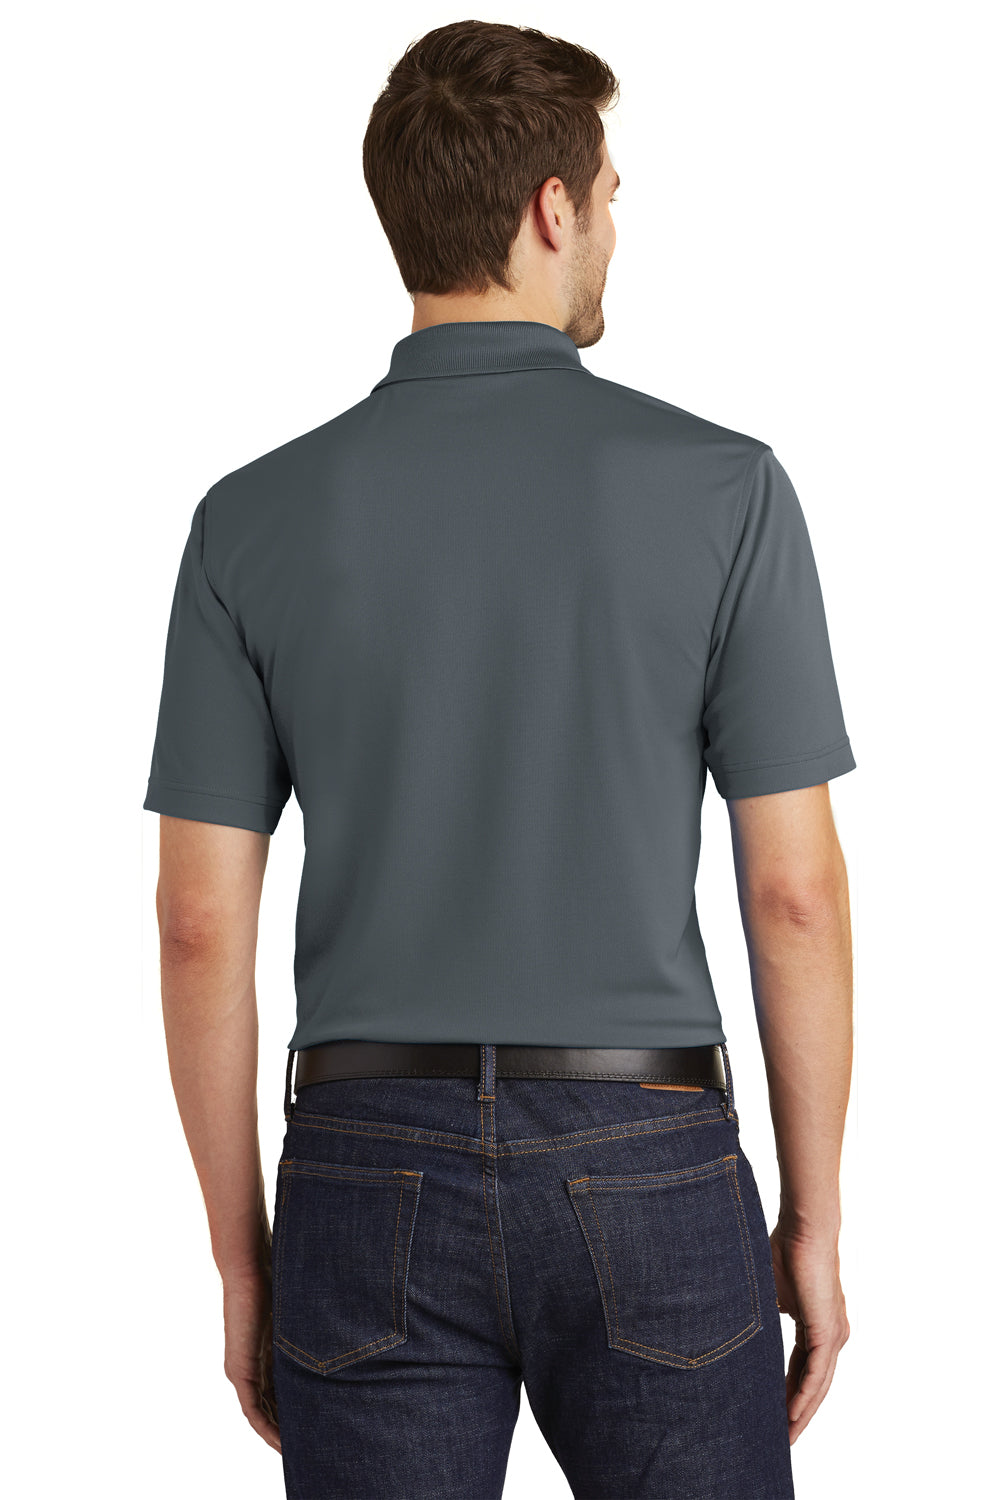 Port Authority K110 Mens Dry Zone Moisture Wicking Short Sleeve Polo Shirt Graphite Grey Back